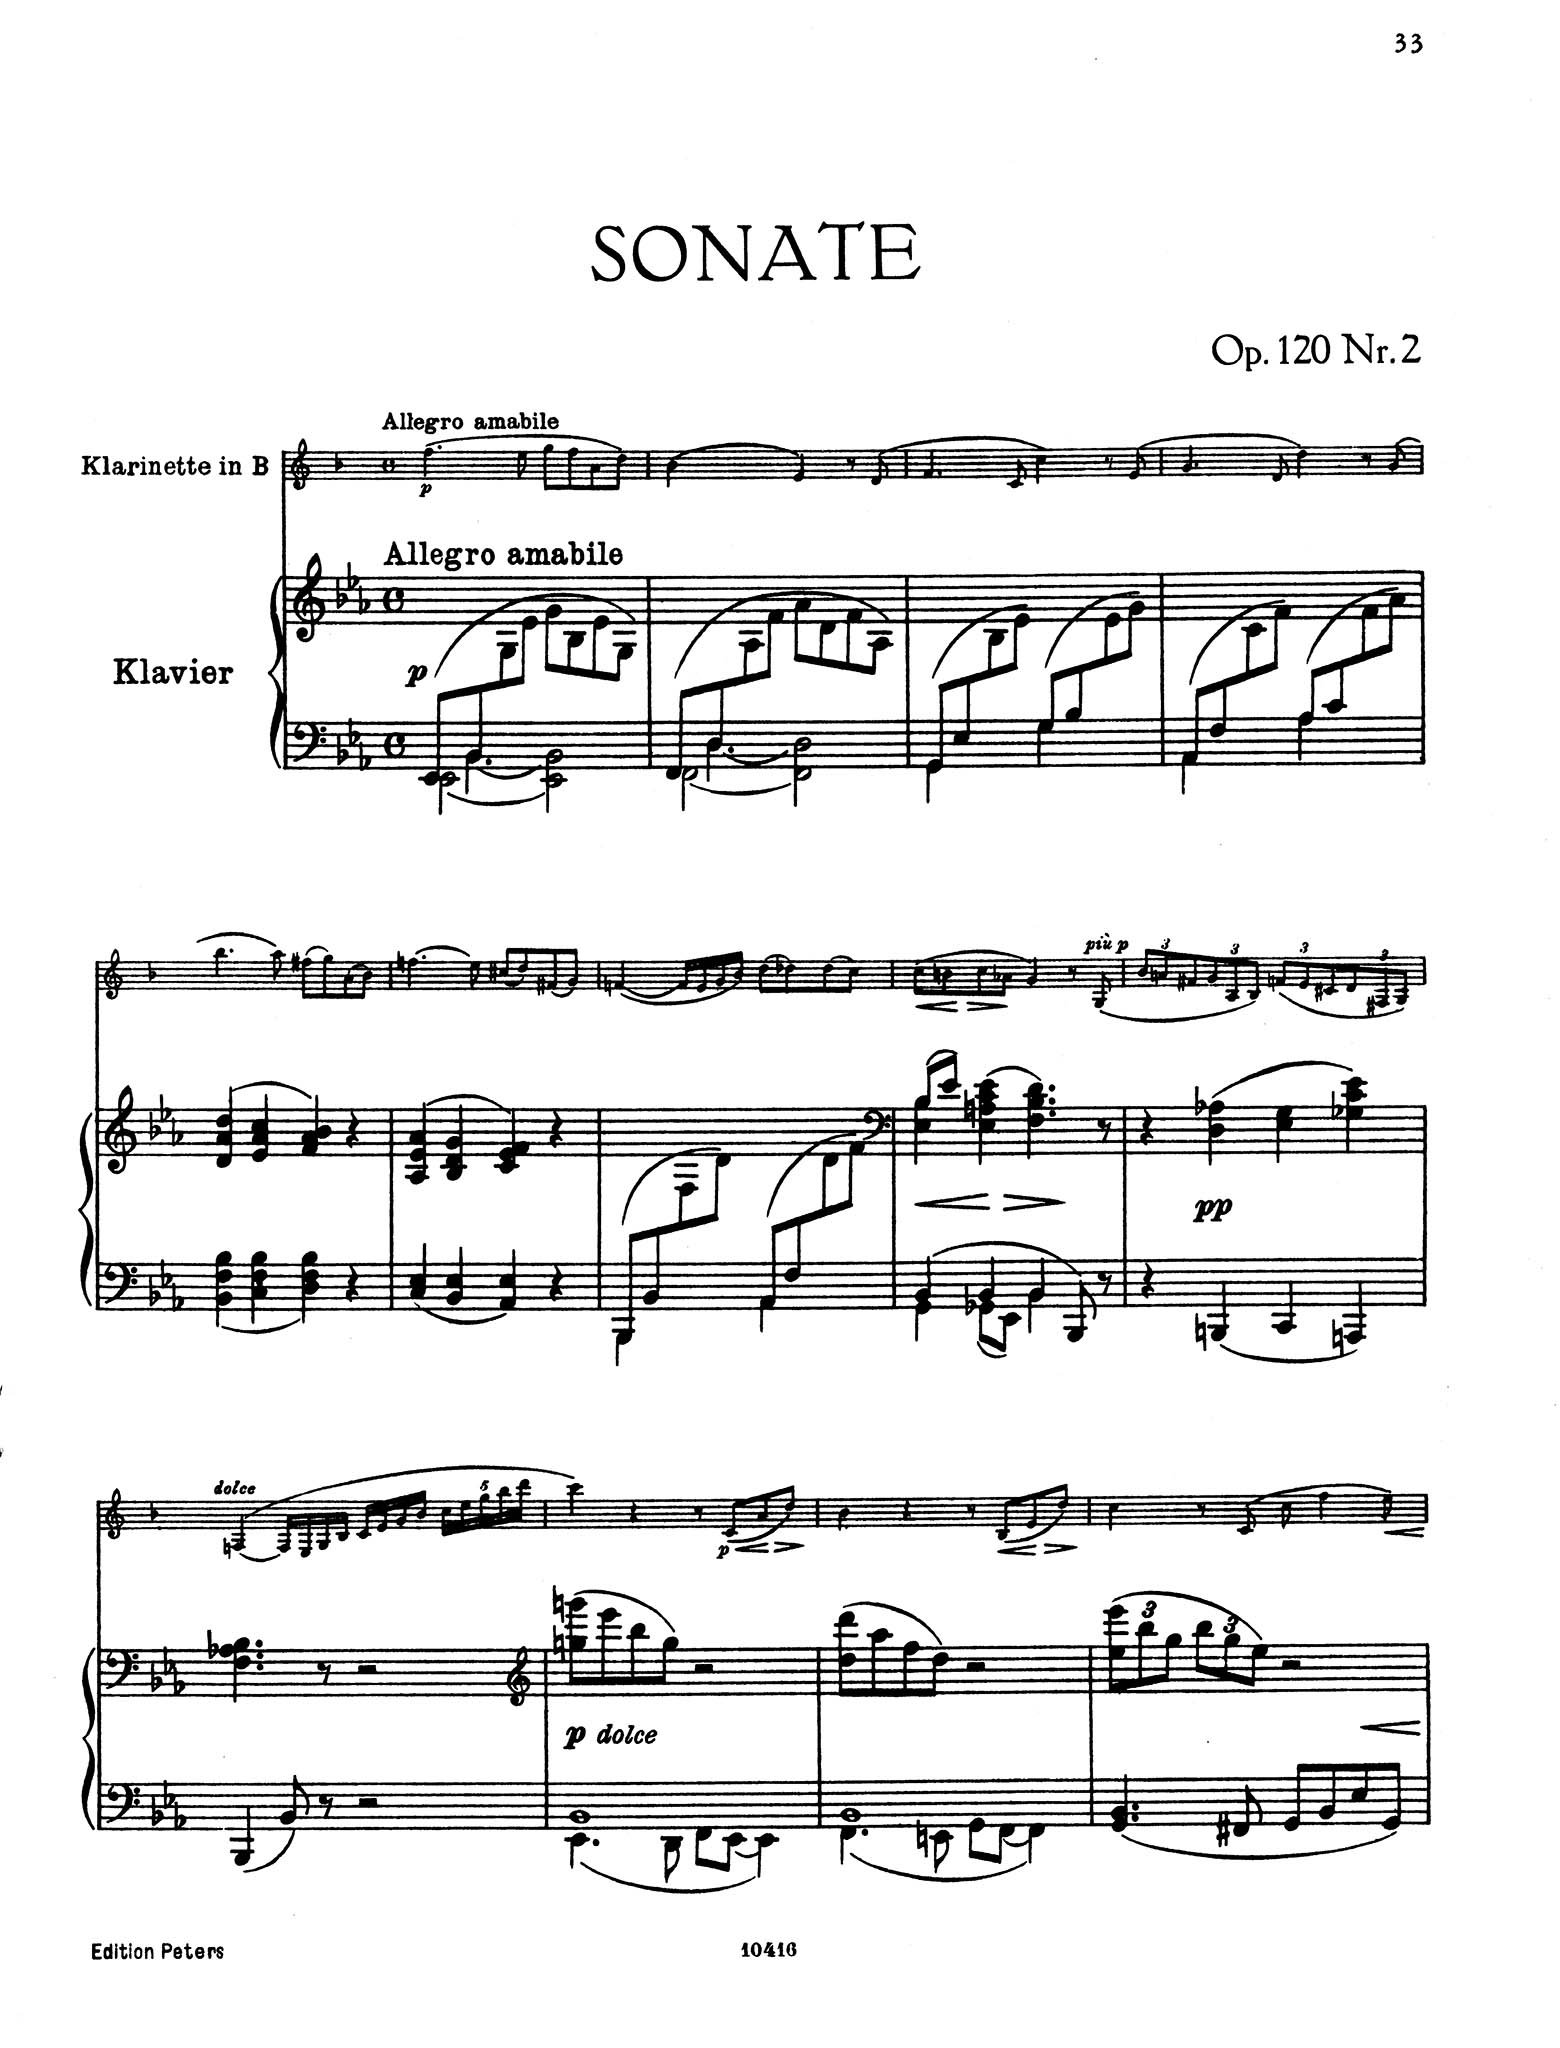 Sonata Op. 120 No. 1 Score